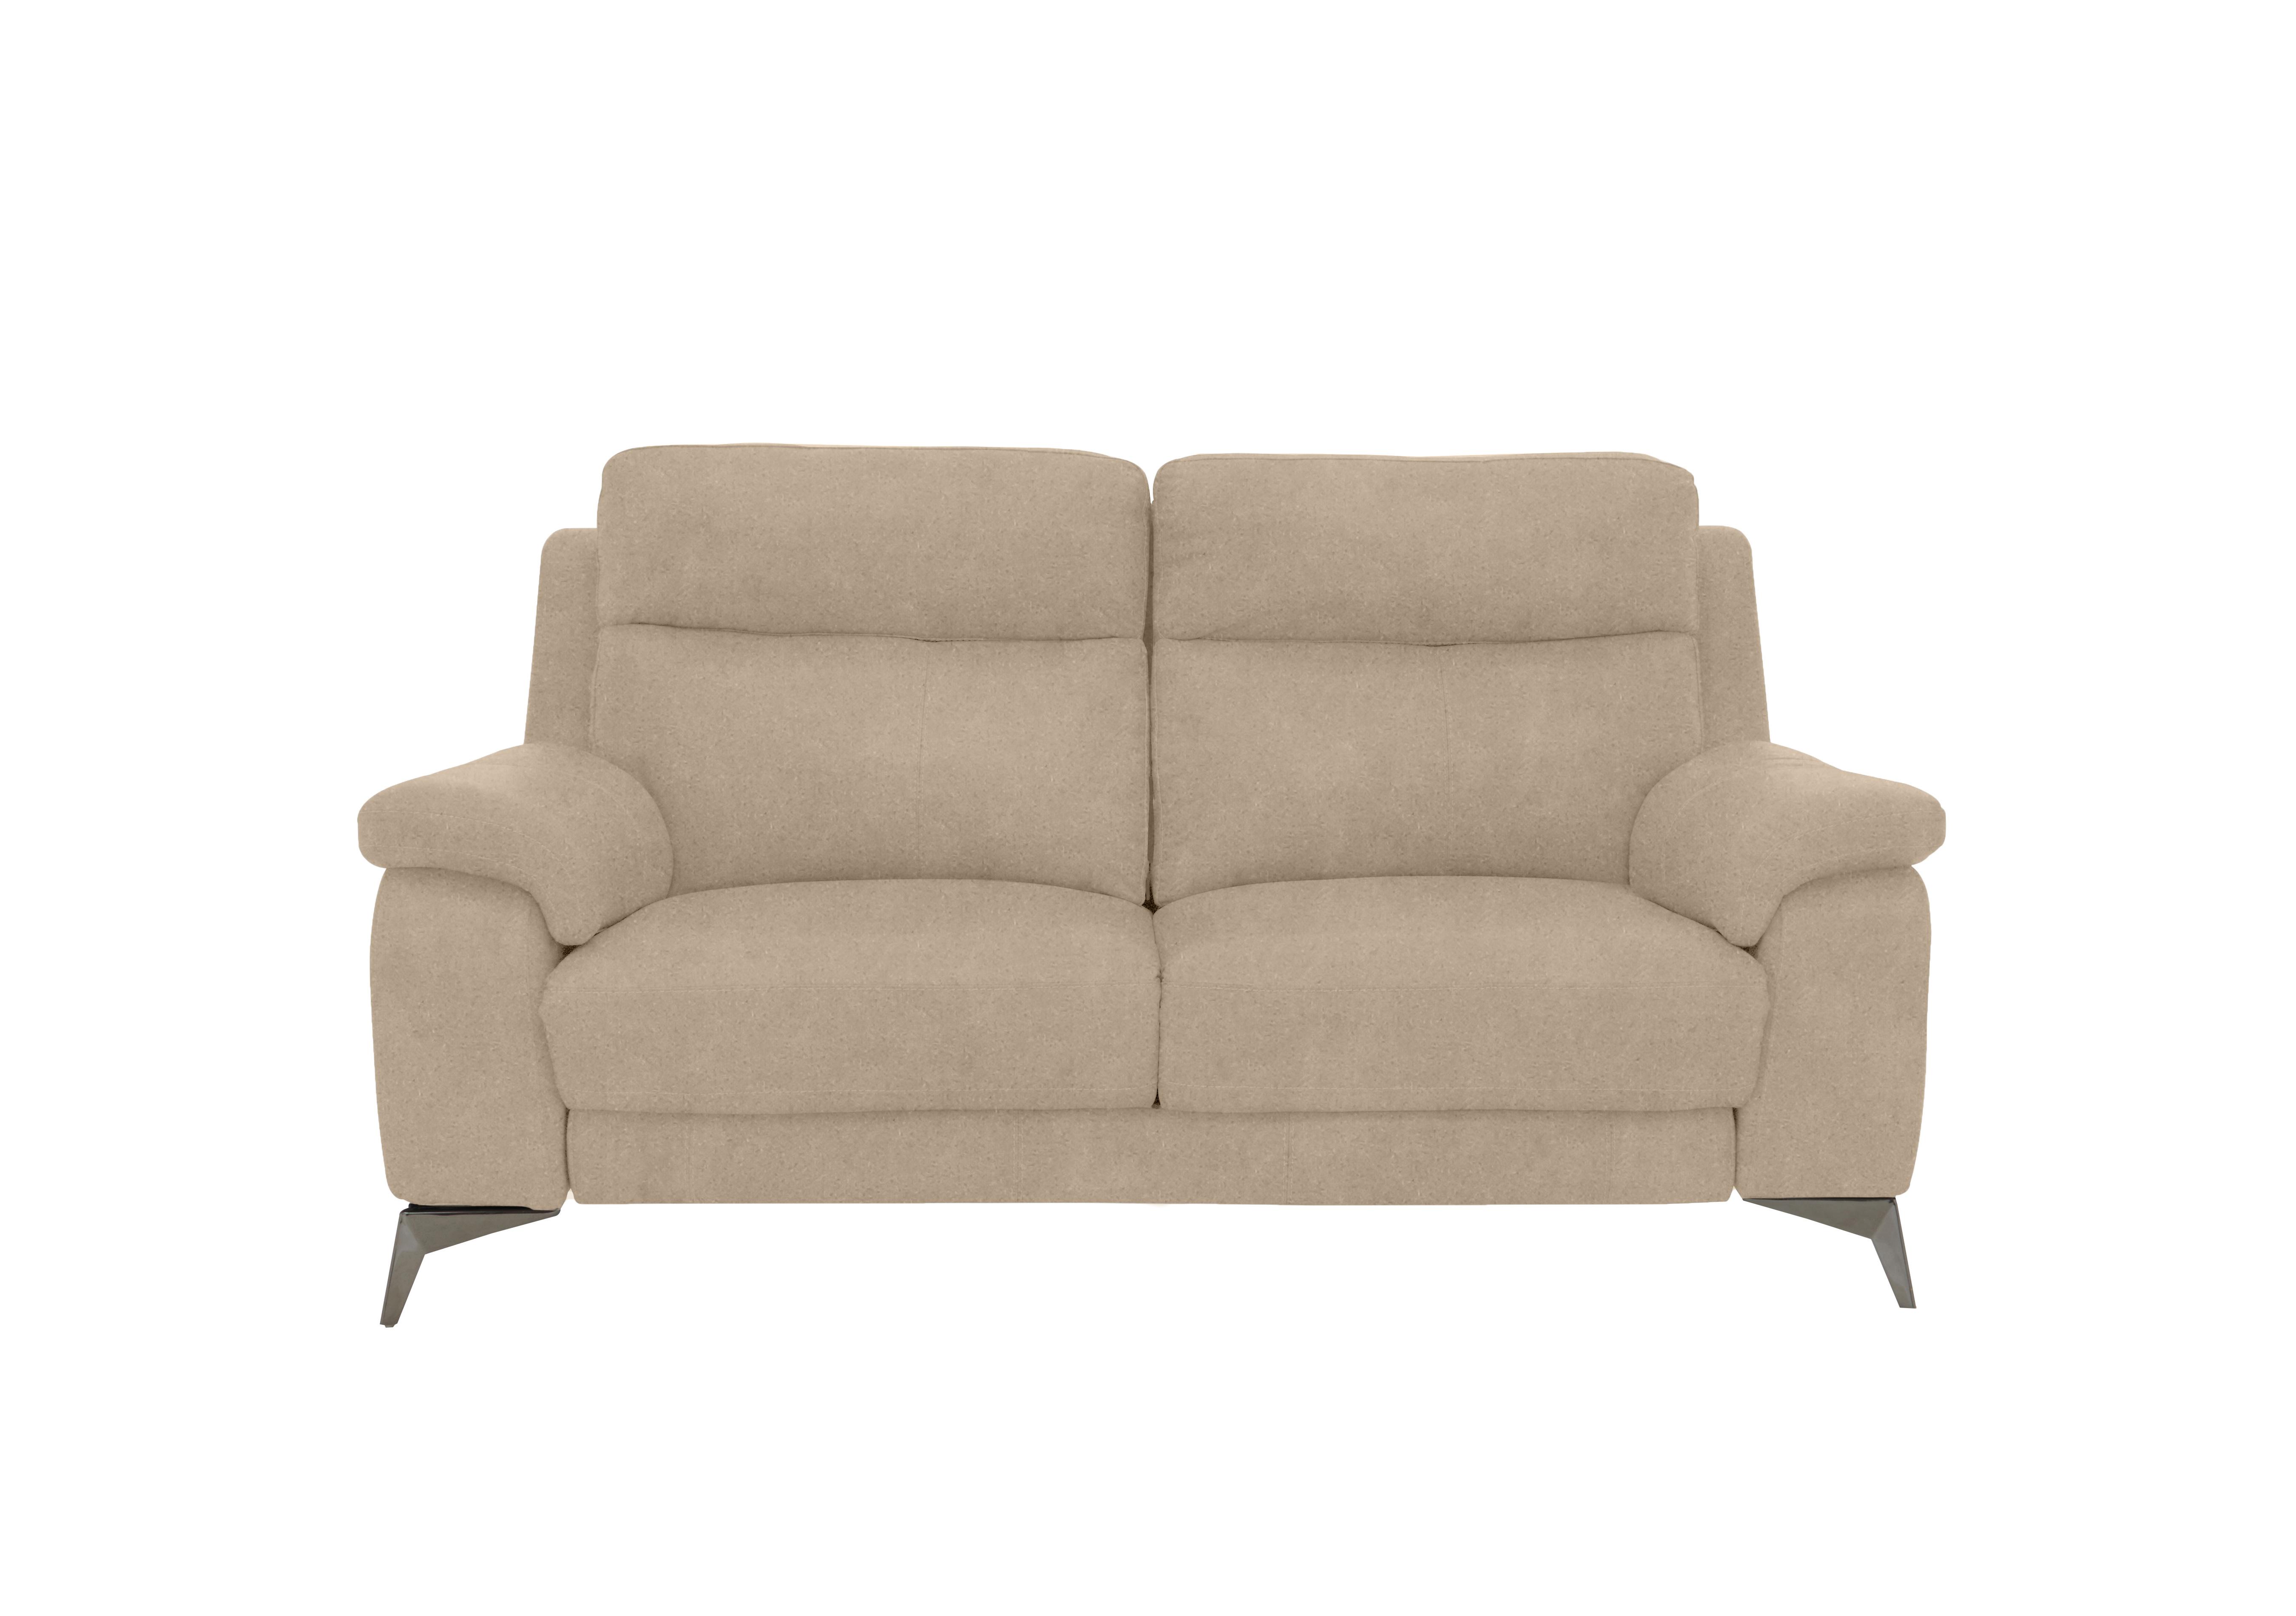 Missouri 2 Seater Fabric Sofa in Bfa-Blj-R20 Bisque on Furniture Village